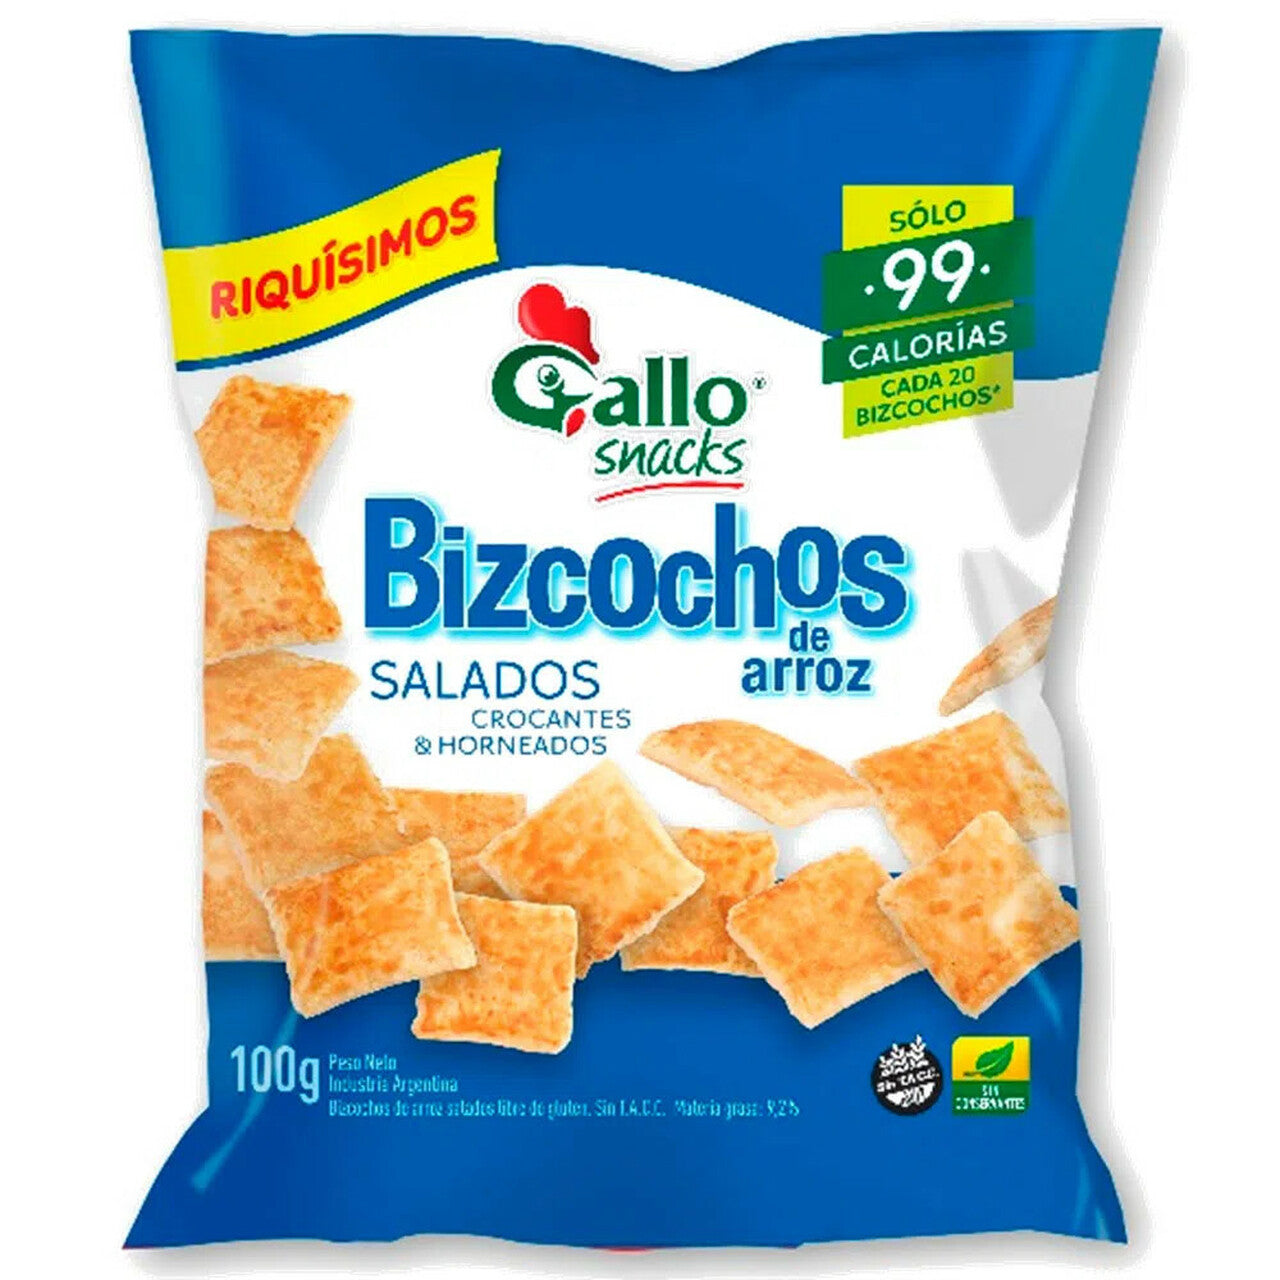 Bizcochitos de Arroz Salados / Savory Rice Biscuits GALLO - (100 gr / 3.53 oz) San Telmo Market, Argentine Grocery & Restaurant, We Ship All Over USA and CANADA